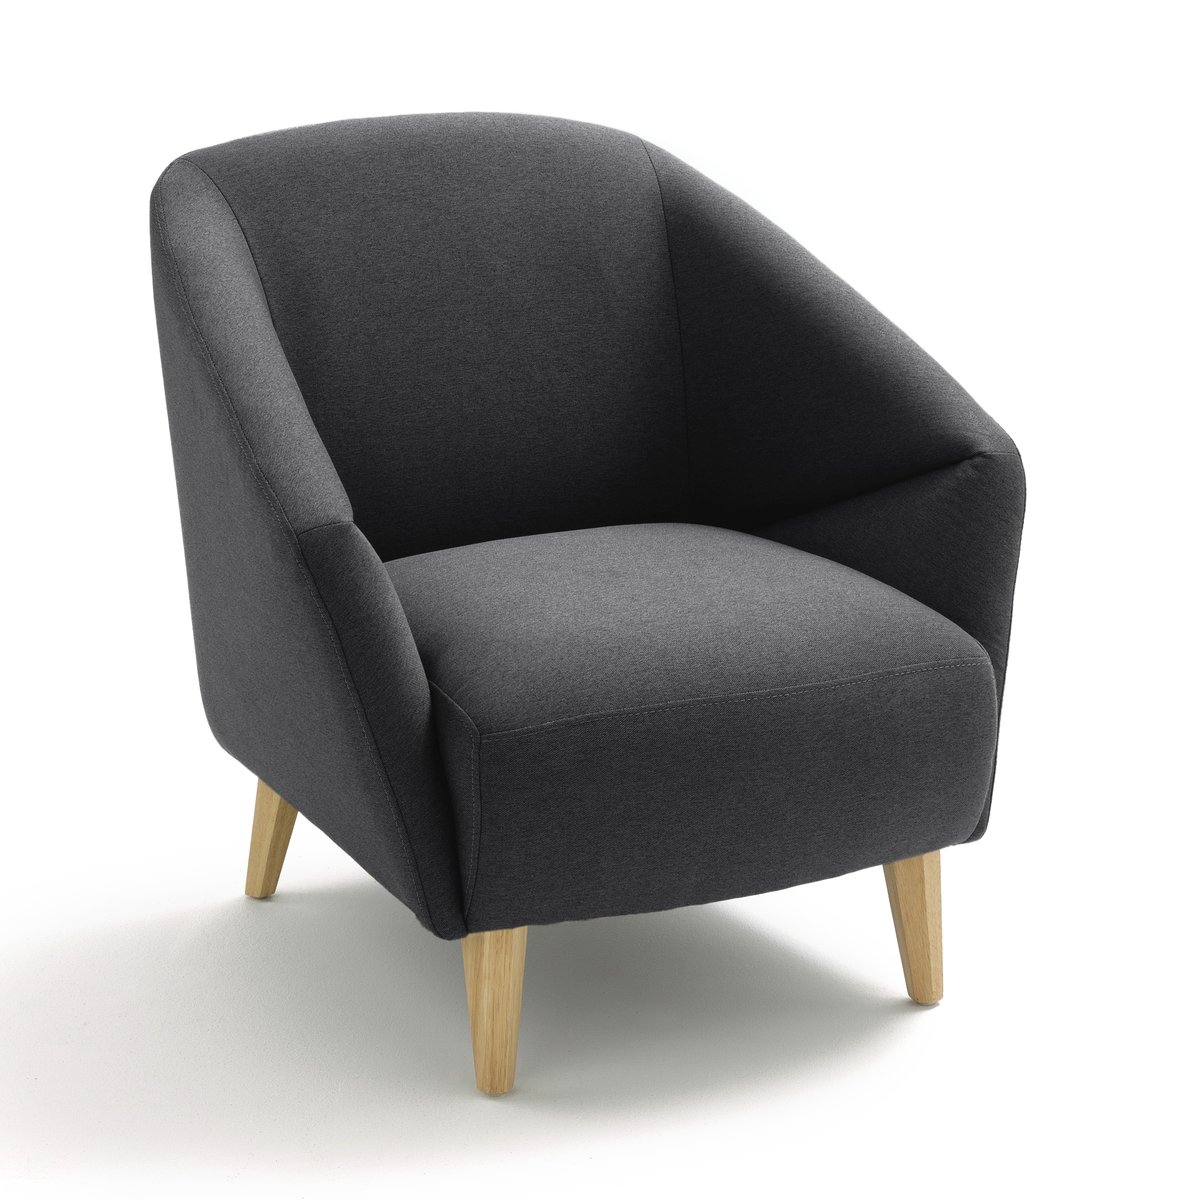 Кресло La Redoute HEXO 1-мест. серый, размер 1-мест. - фото 1